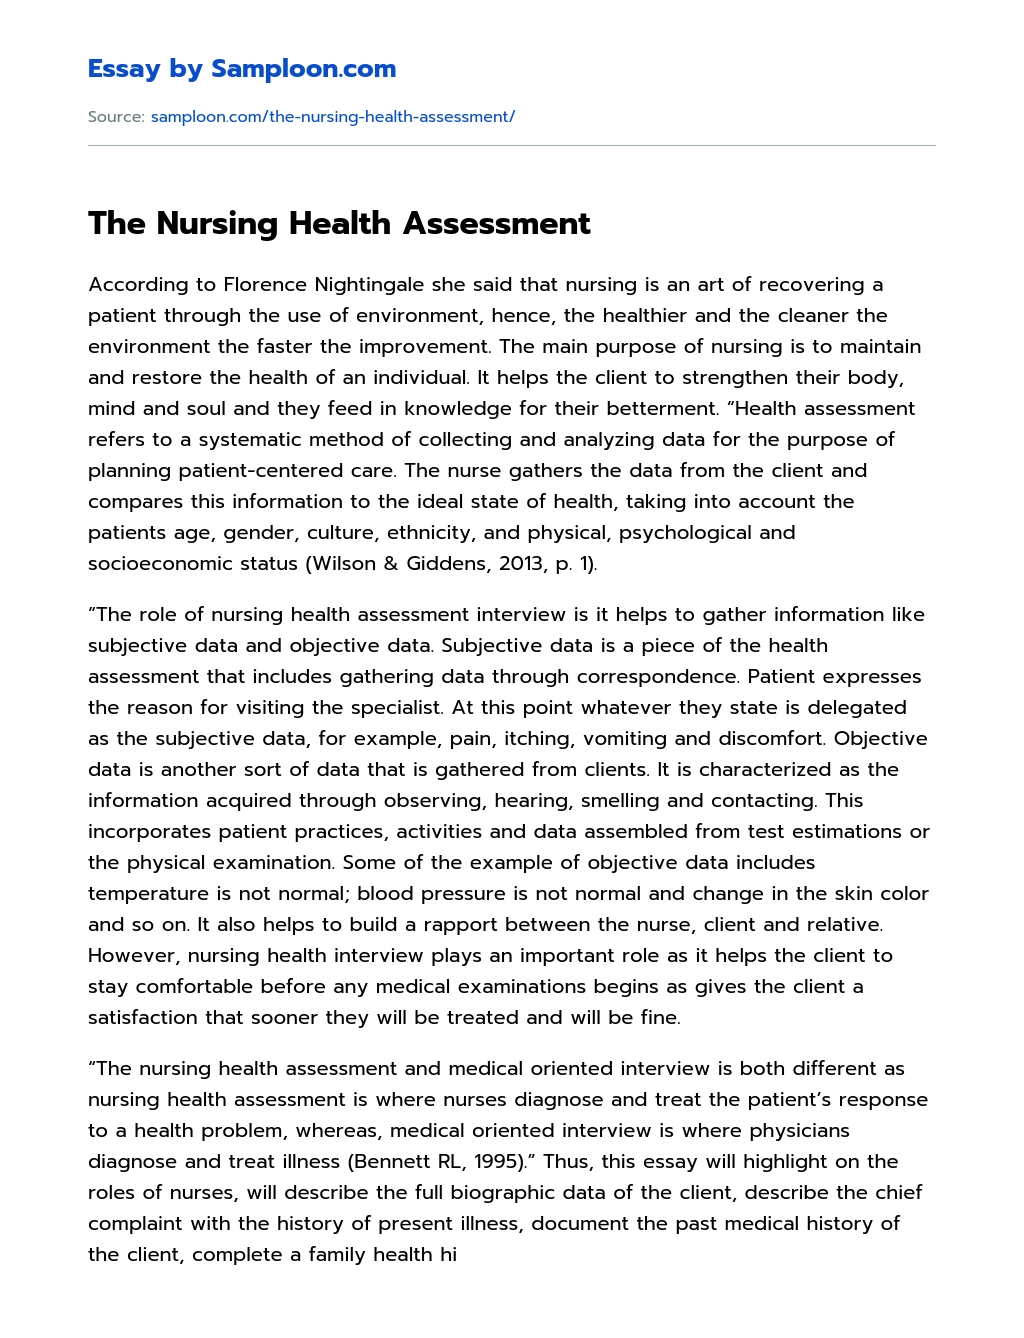 The Nursing Health Assessment essay